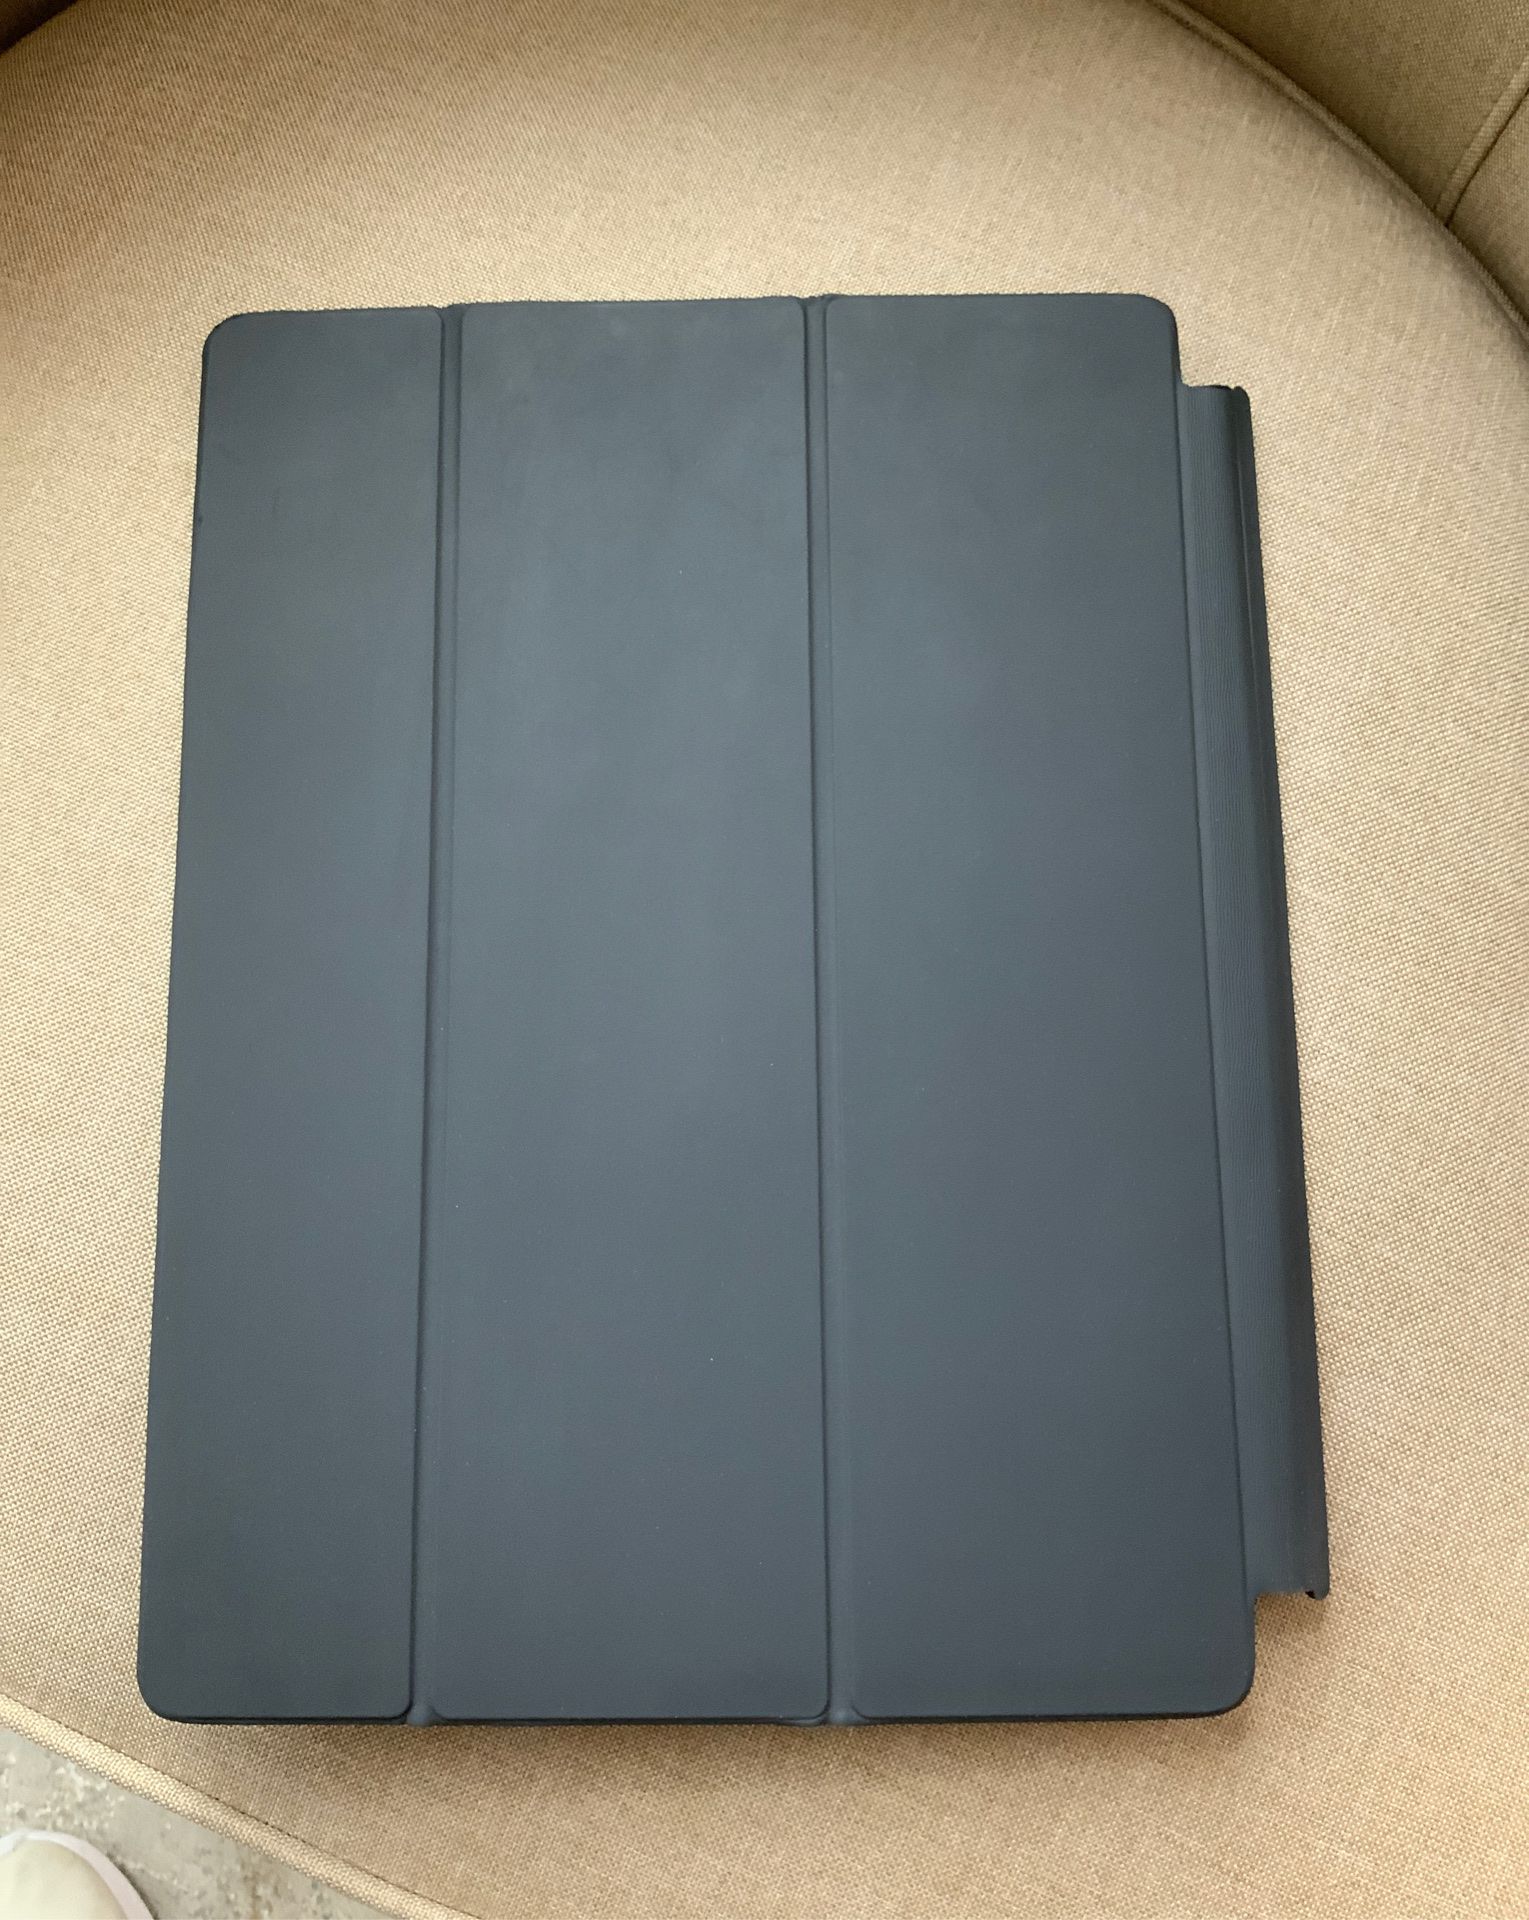 iPad smart folio for 12.9” iPad Pro